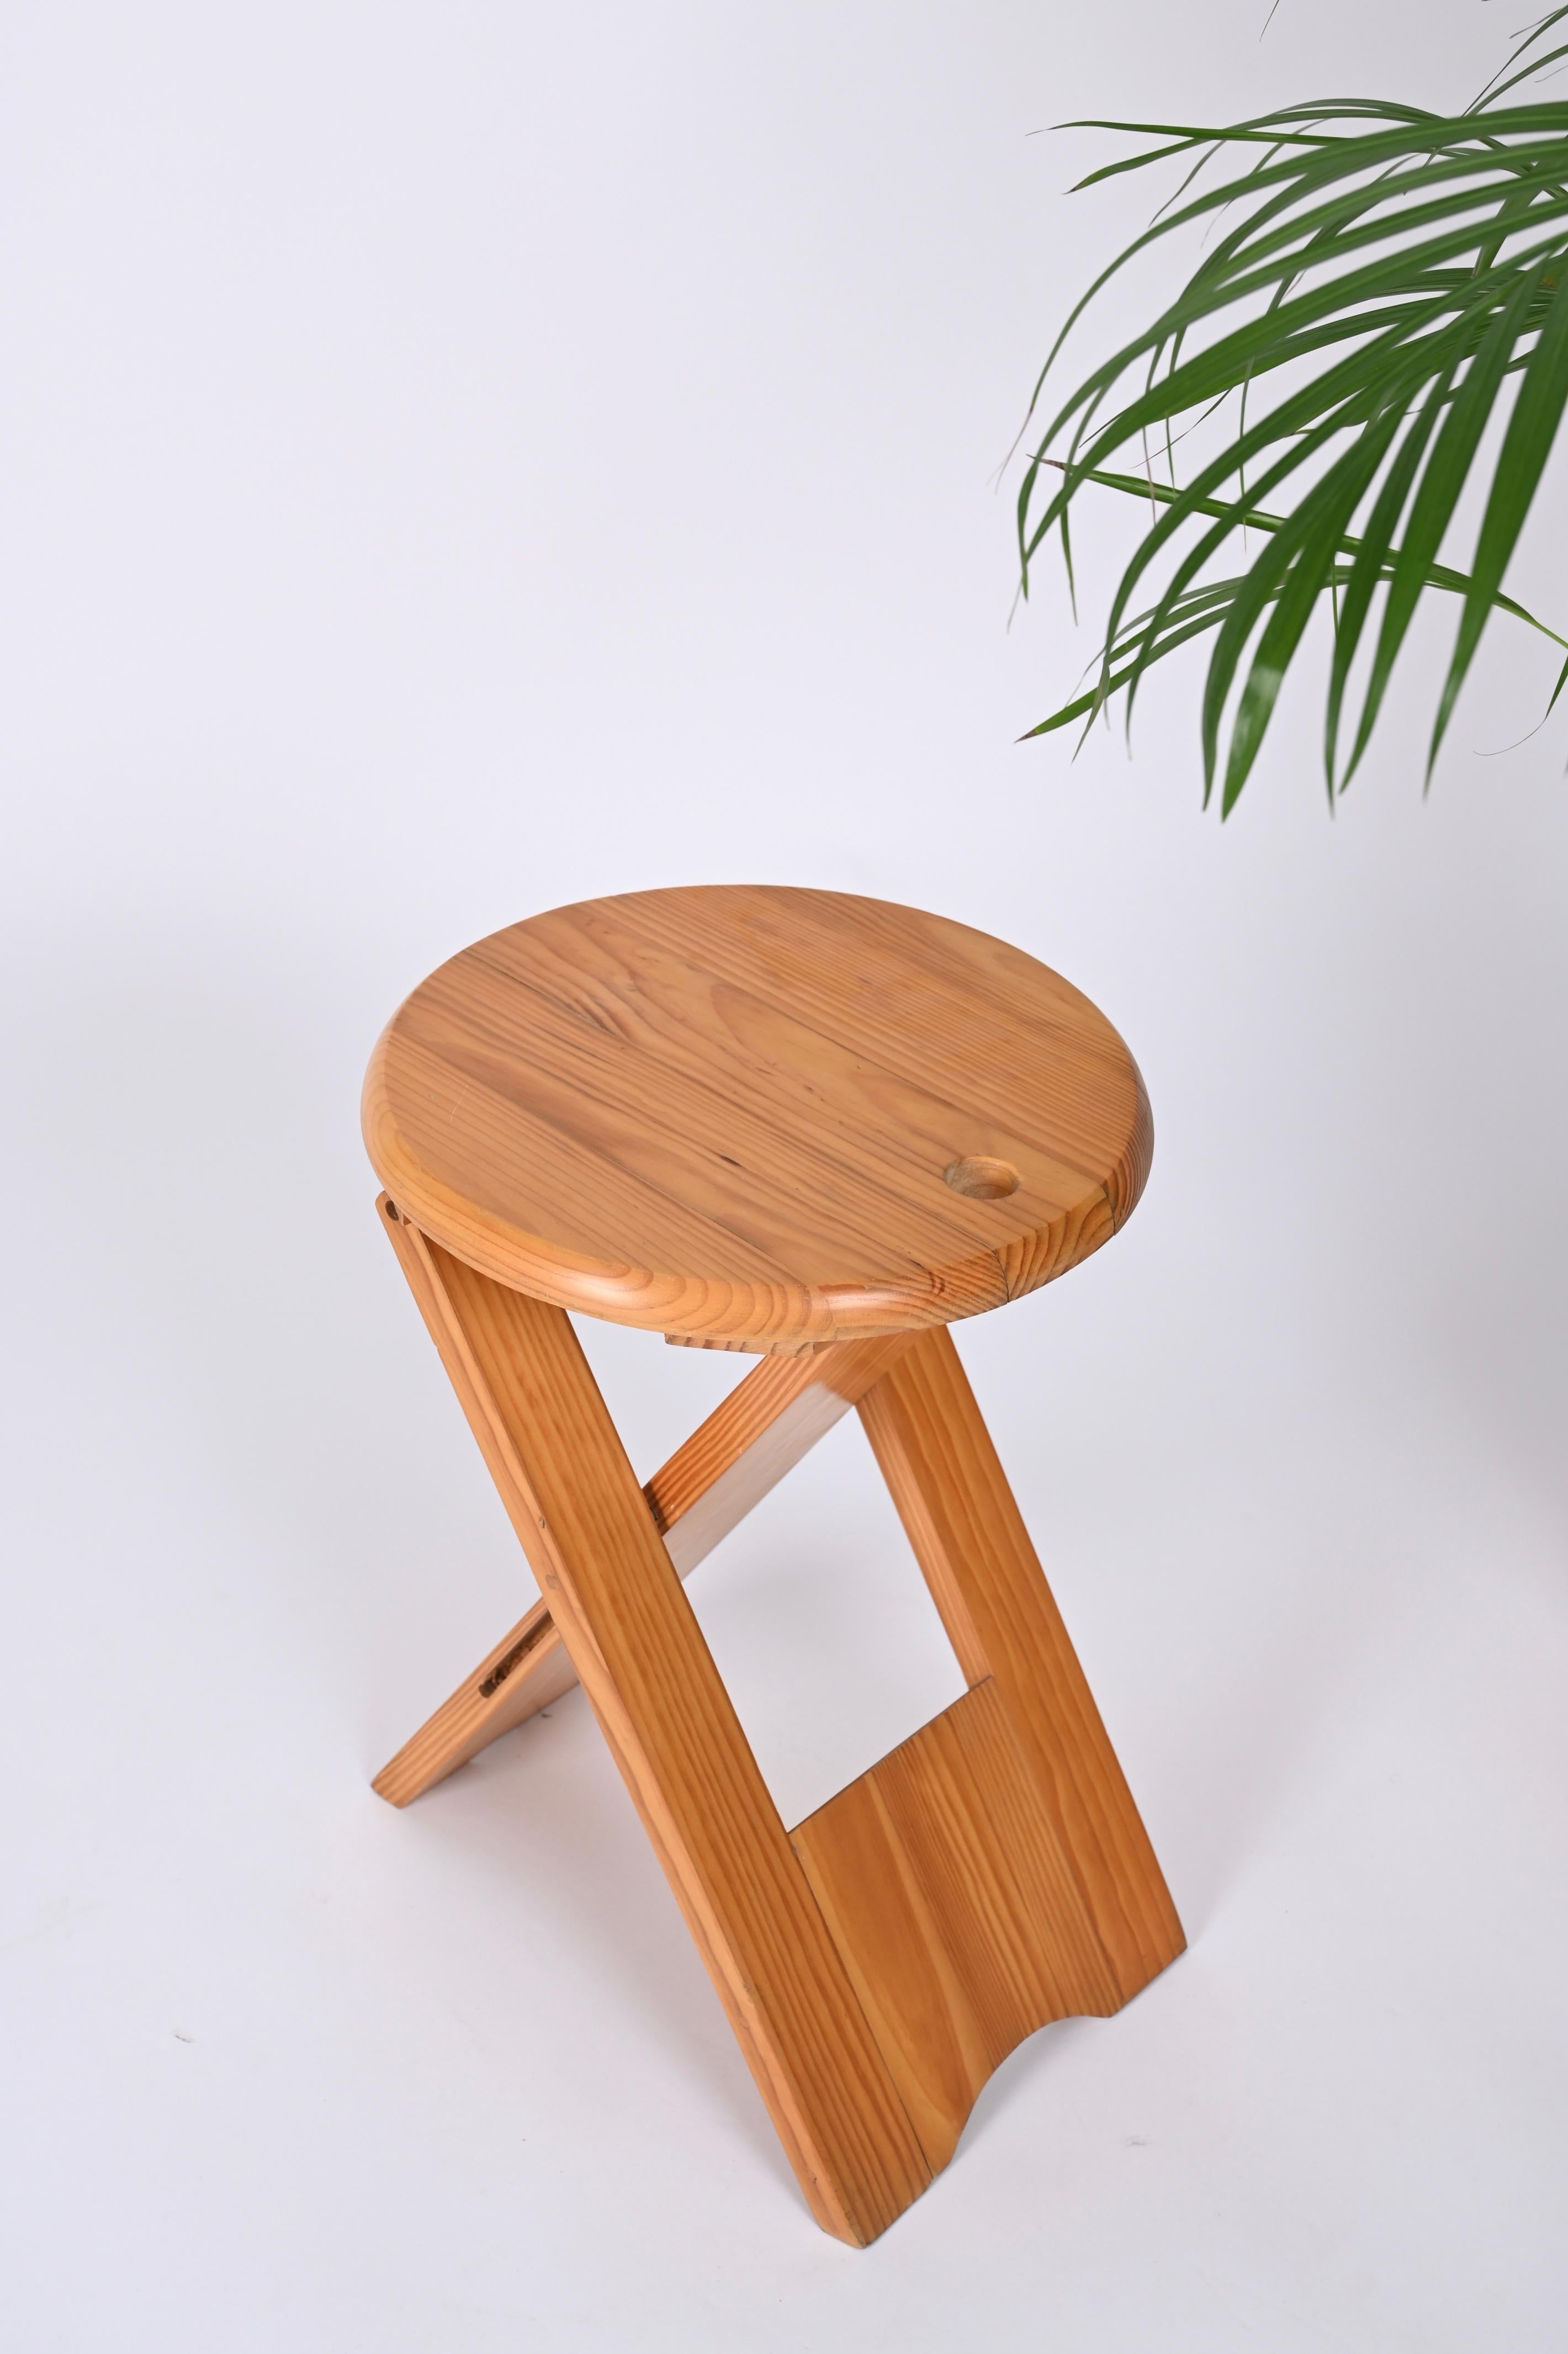 roger tallon stool